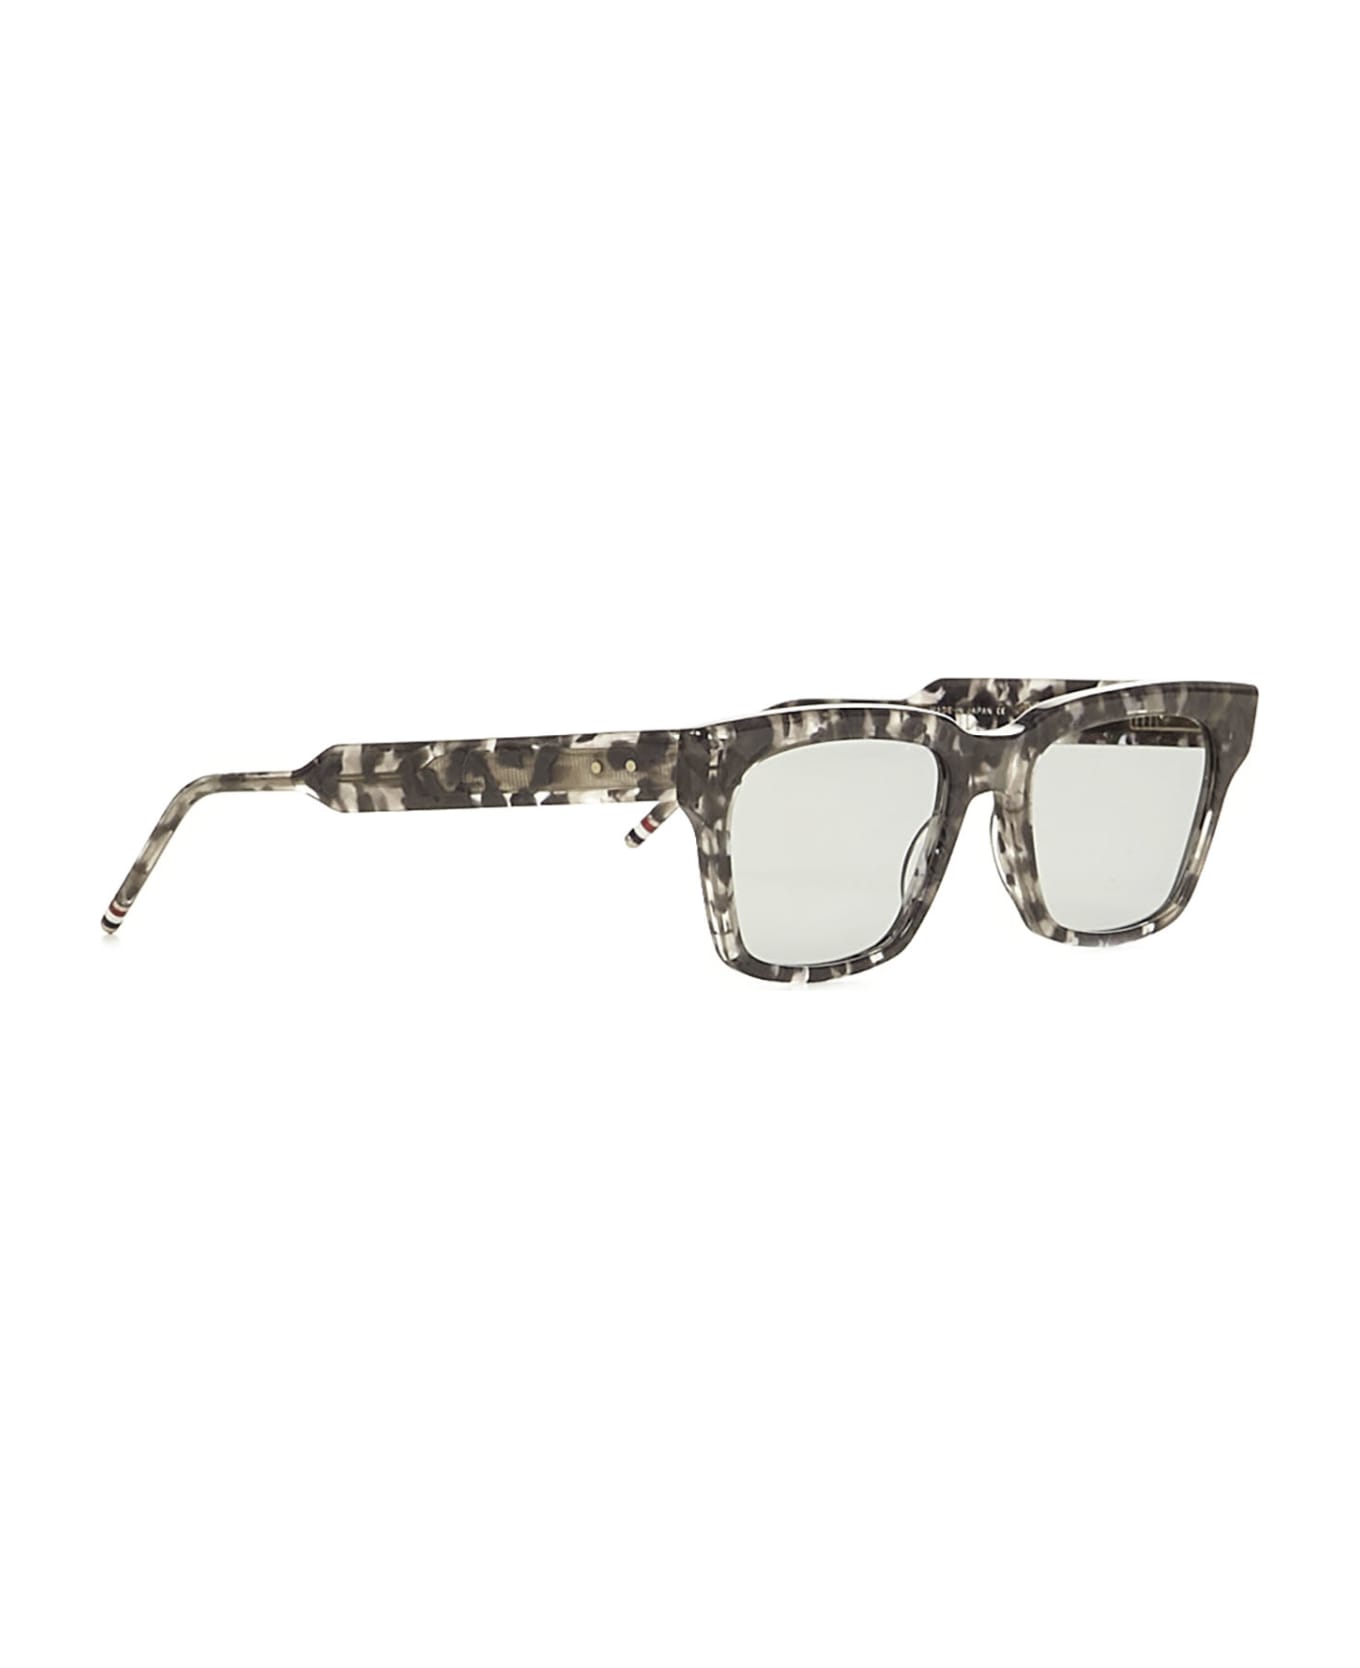 Thom Browne Sunglasses Tb418 Sunglasses - Dove Grey サングラス